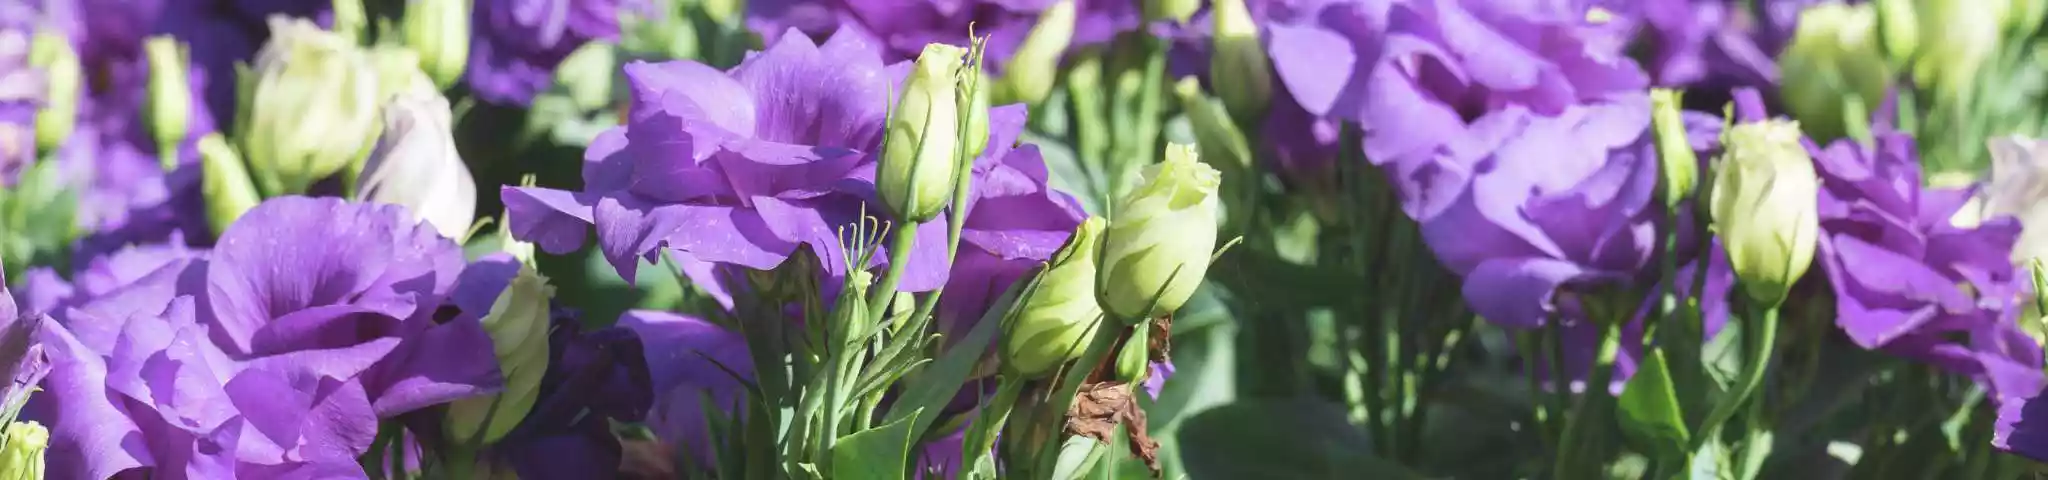 Lisianthus Flowers